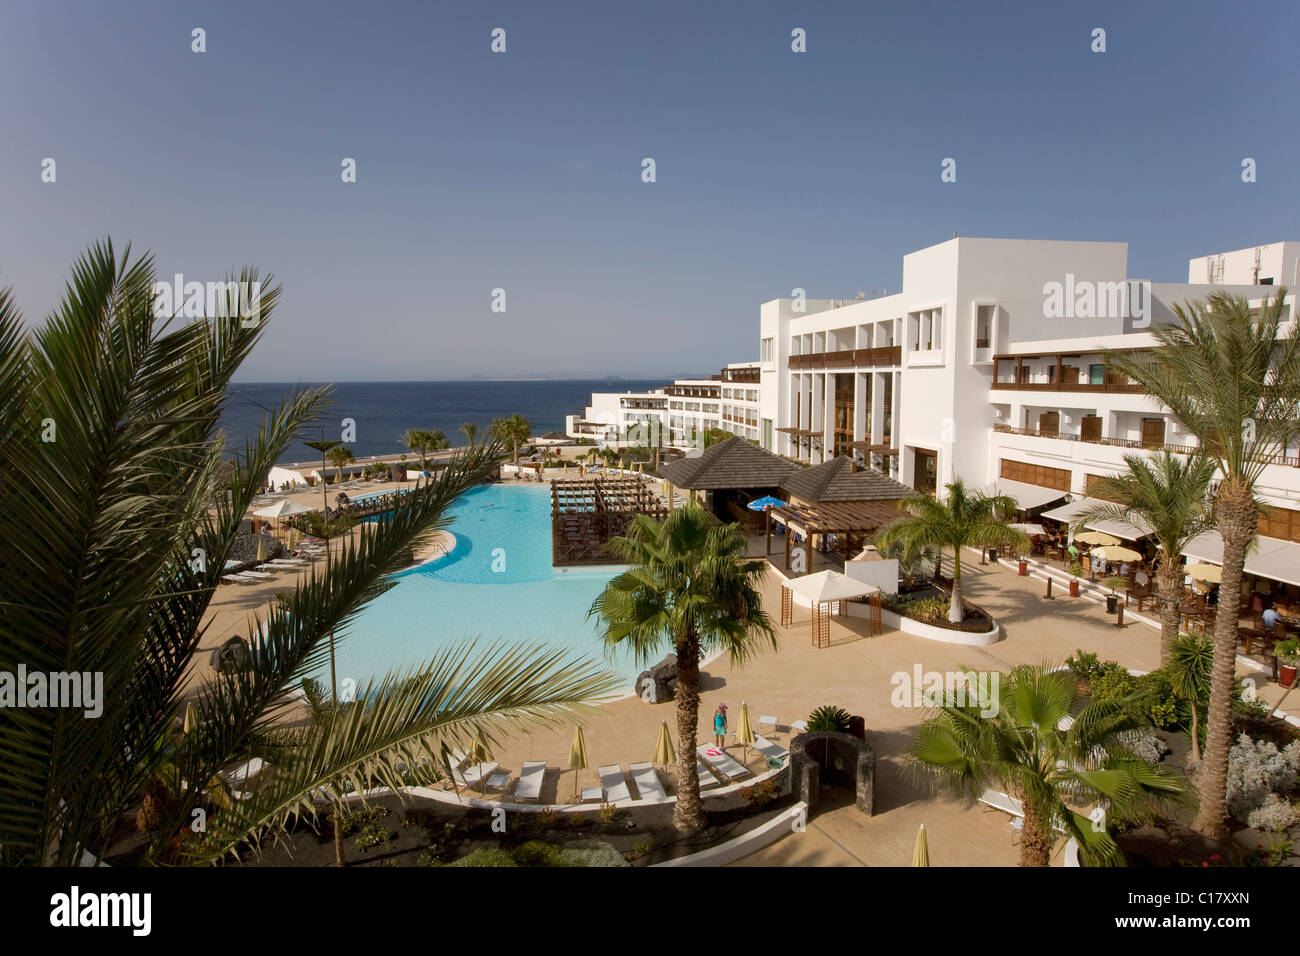 Swimming pool of the Hotel Hesperia Lanzarote, Costa Calero, Lanzarote, Canary Islands, Spain, Europe Stock Photo